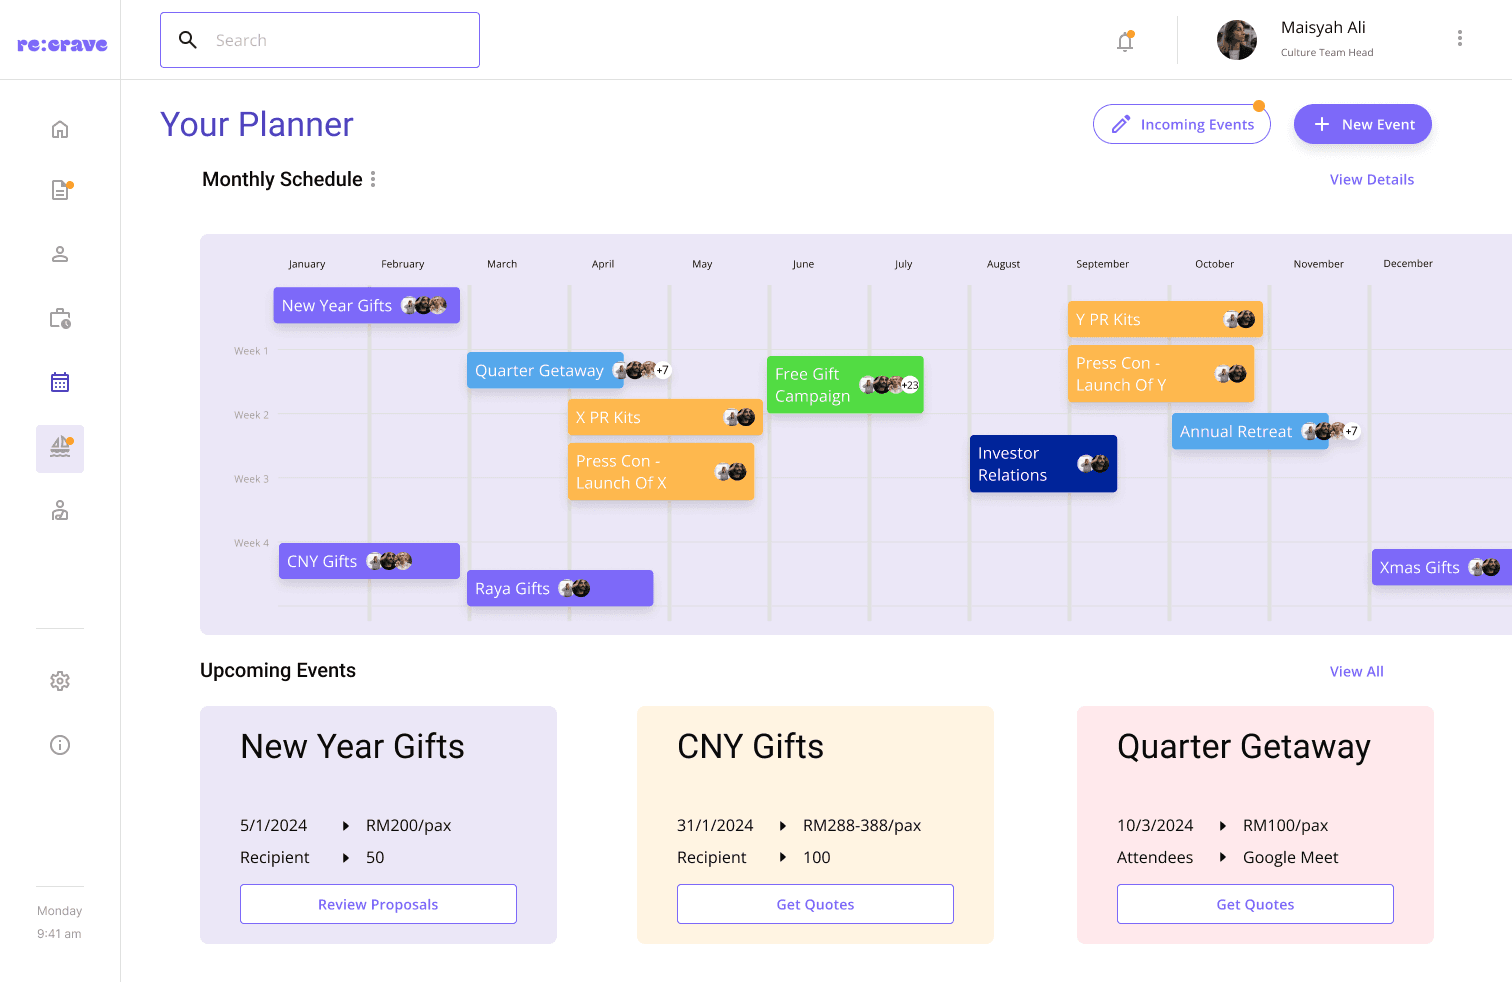 UI of gift planner